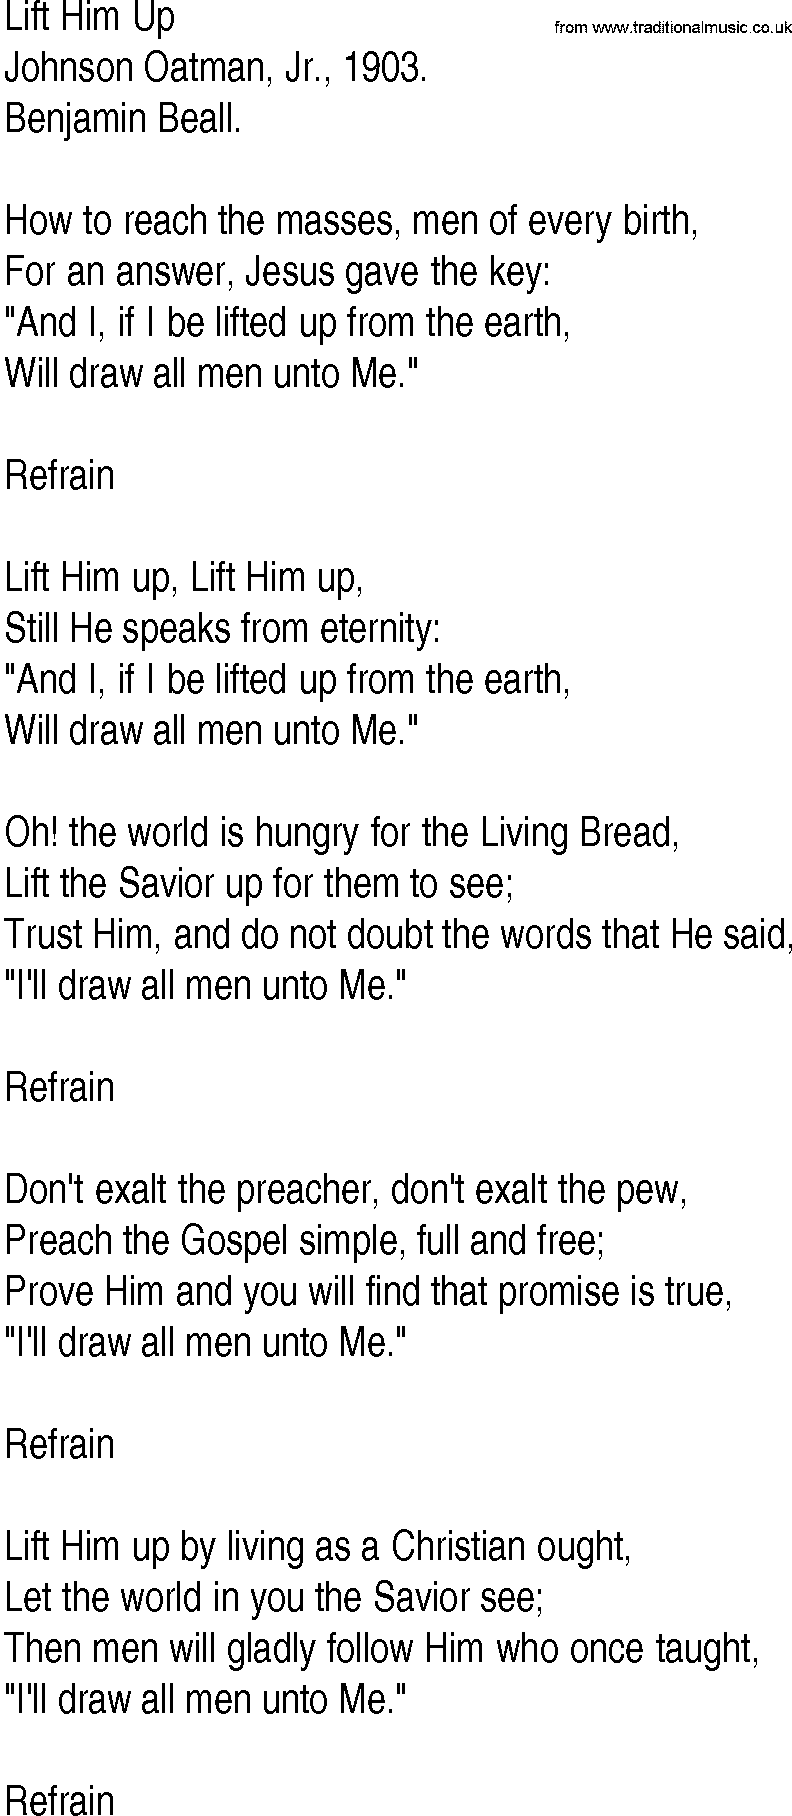 Hymn and Gospel Song: Lift Him Up by Johnson Oatman Jr lyrics